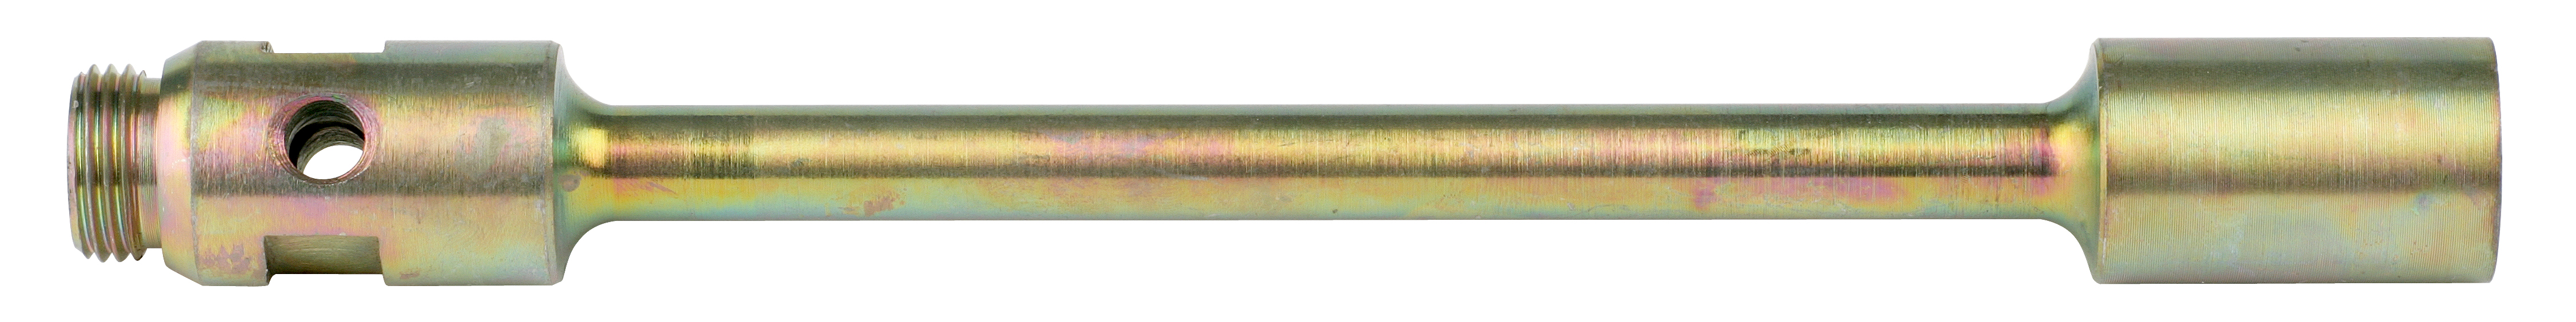 Spectrum 1/2 BSP 250mm Solid Extension + A Taper